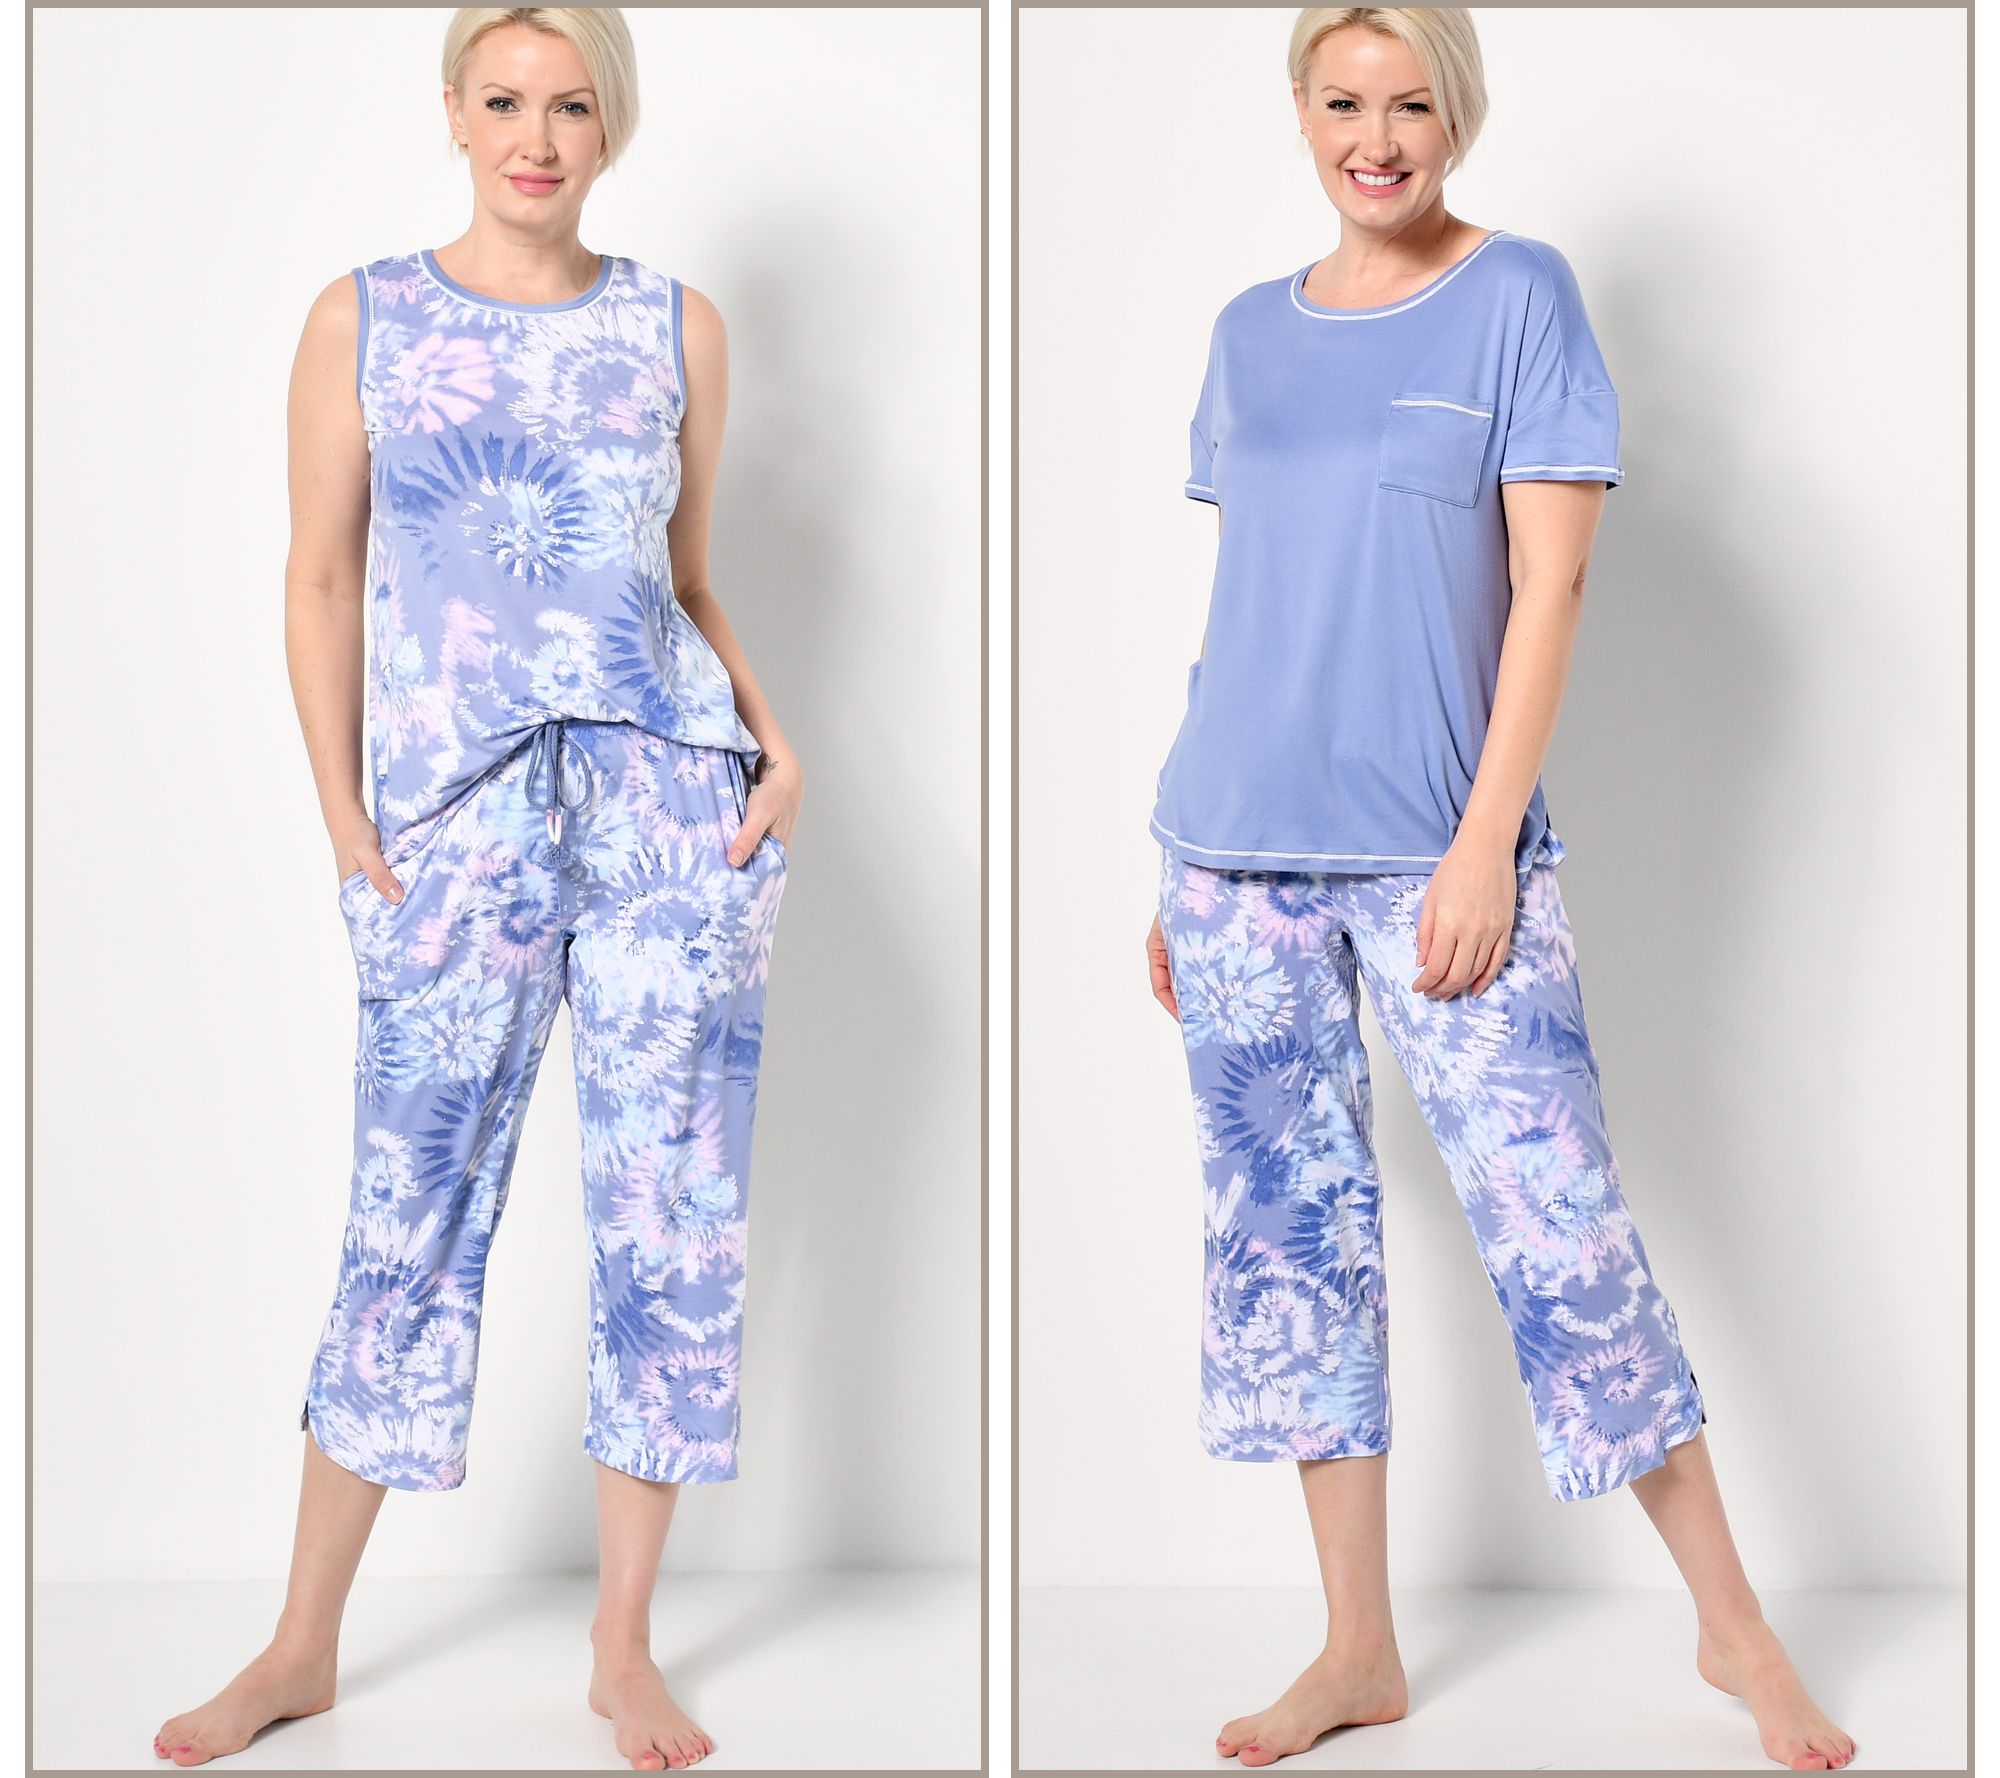 Ladies 4 Piece Pyjama Set from Carole Hochman - these are made